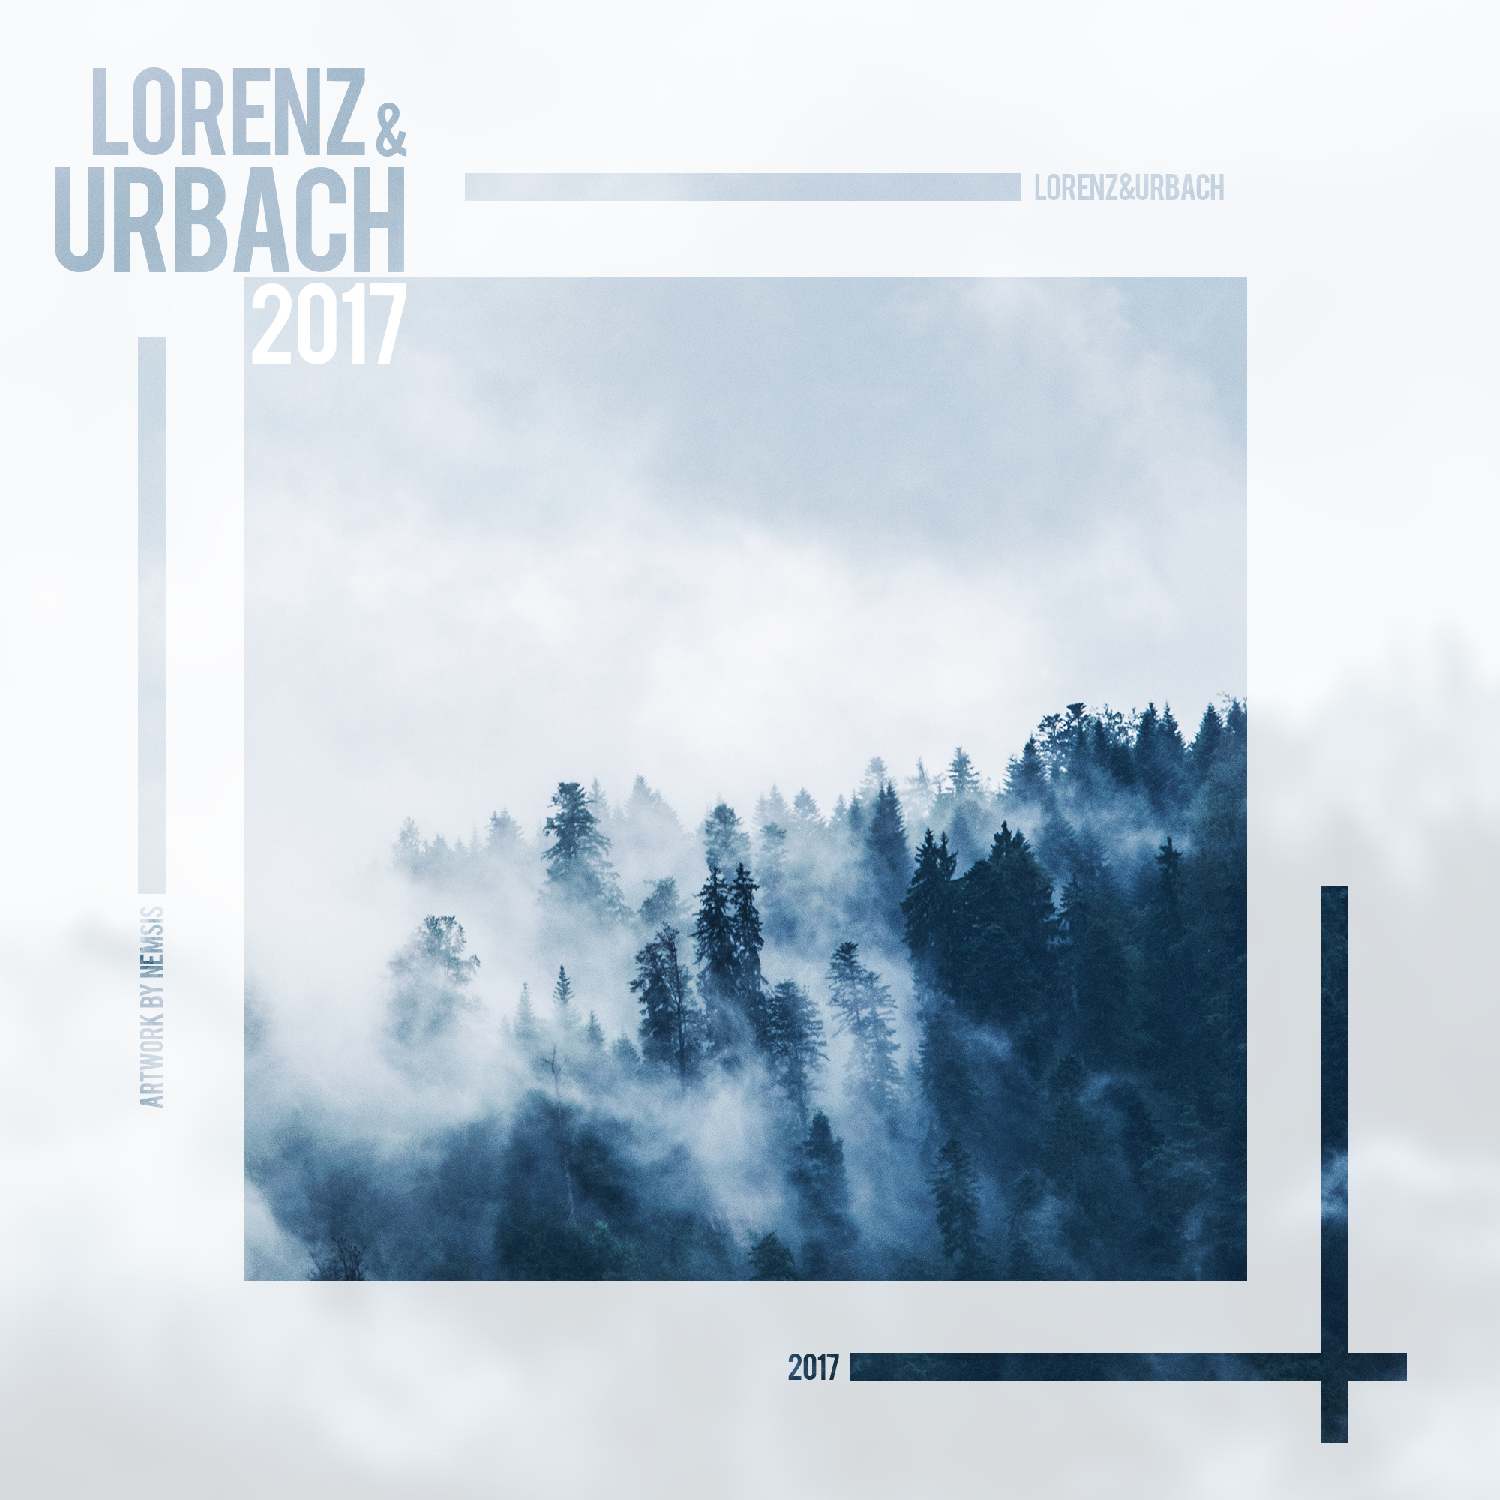 Lorenz & Urbach - 2017